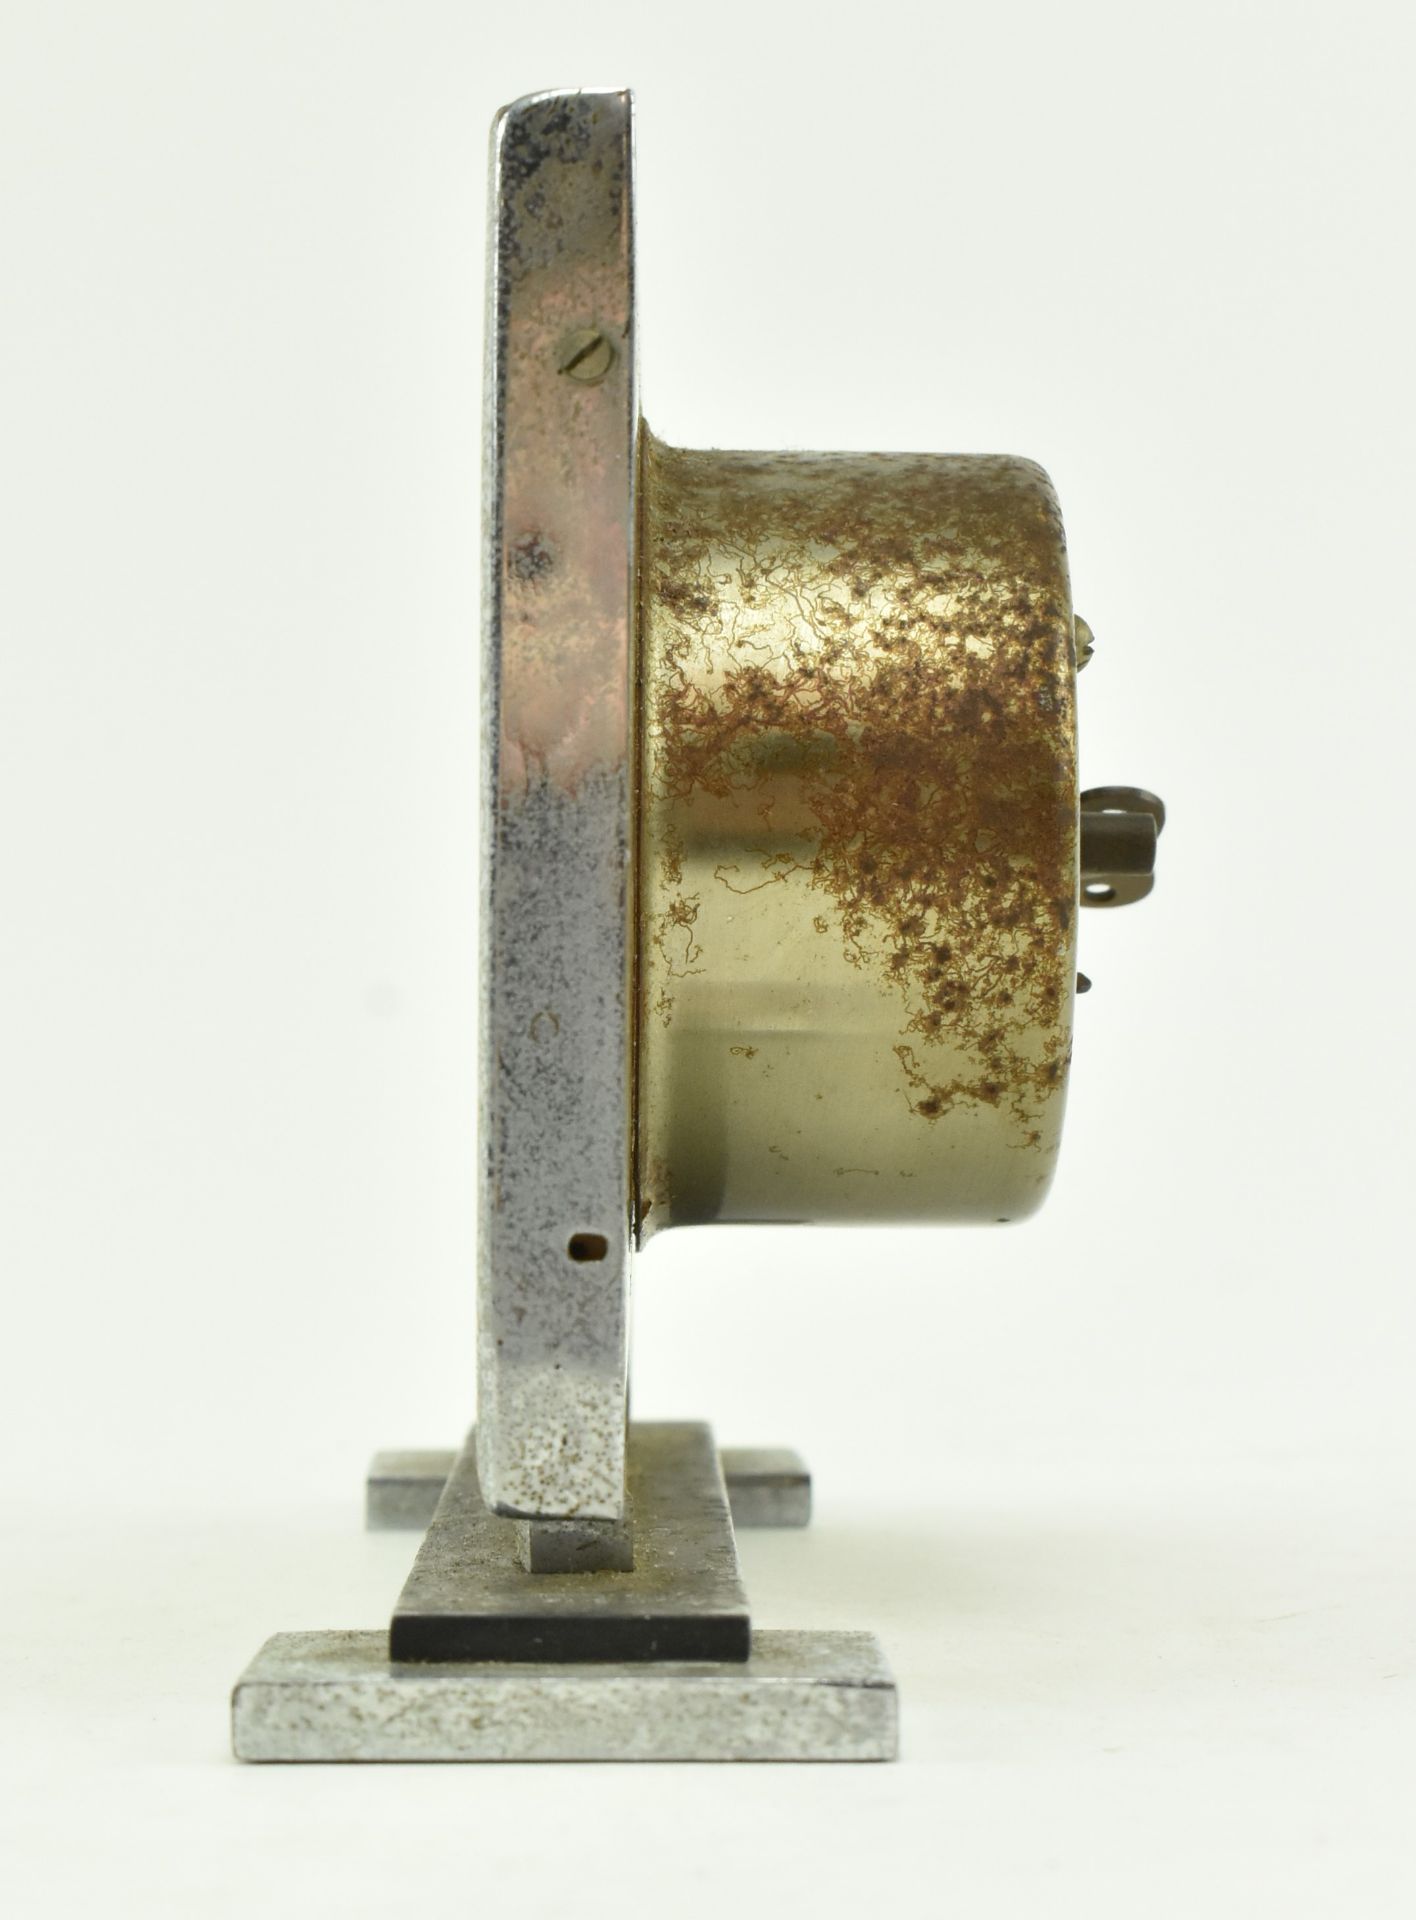 1920S ART DECO CHROME CASED DESK CLOCK - Image 5 of 8